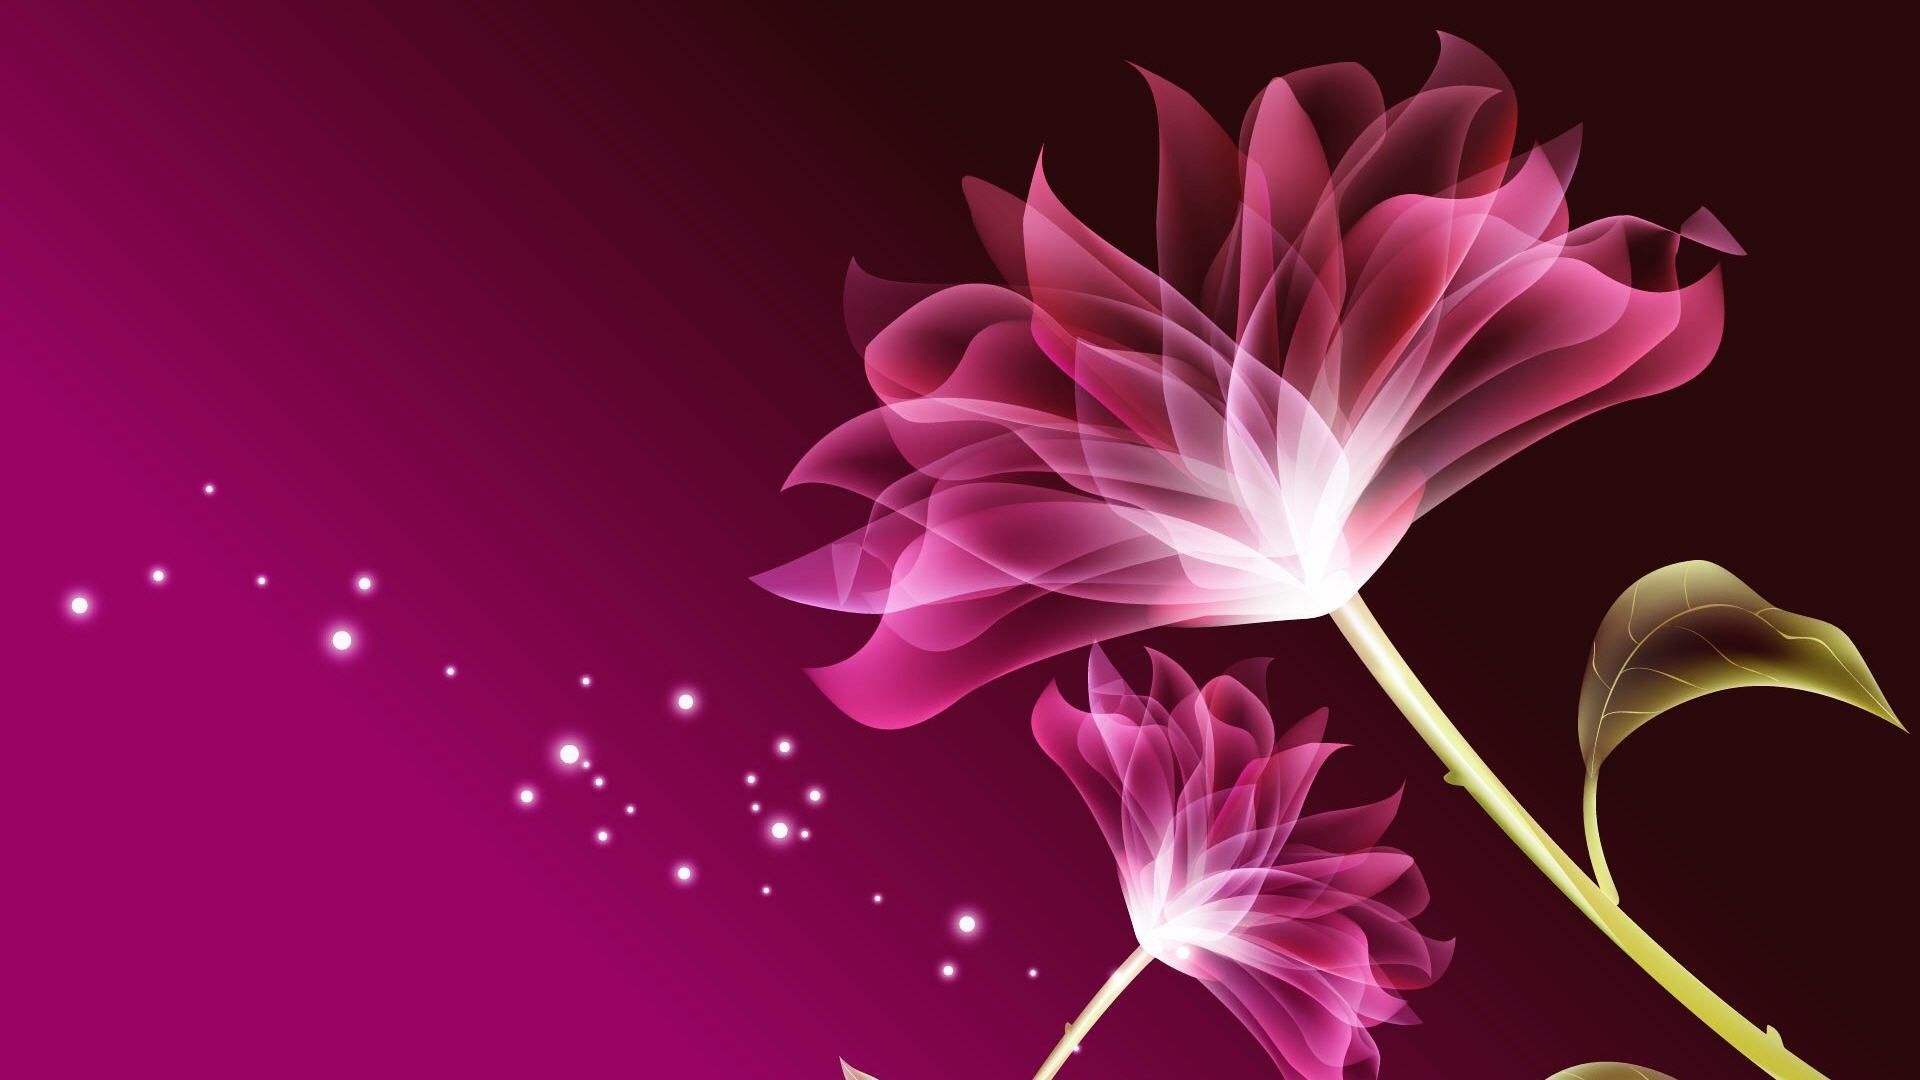 3d Pink Beautiful Flower Wallpaper | pretty flowers | Pinterest ...